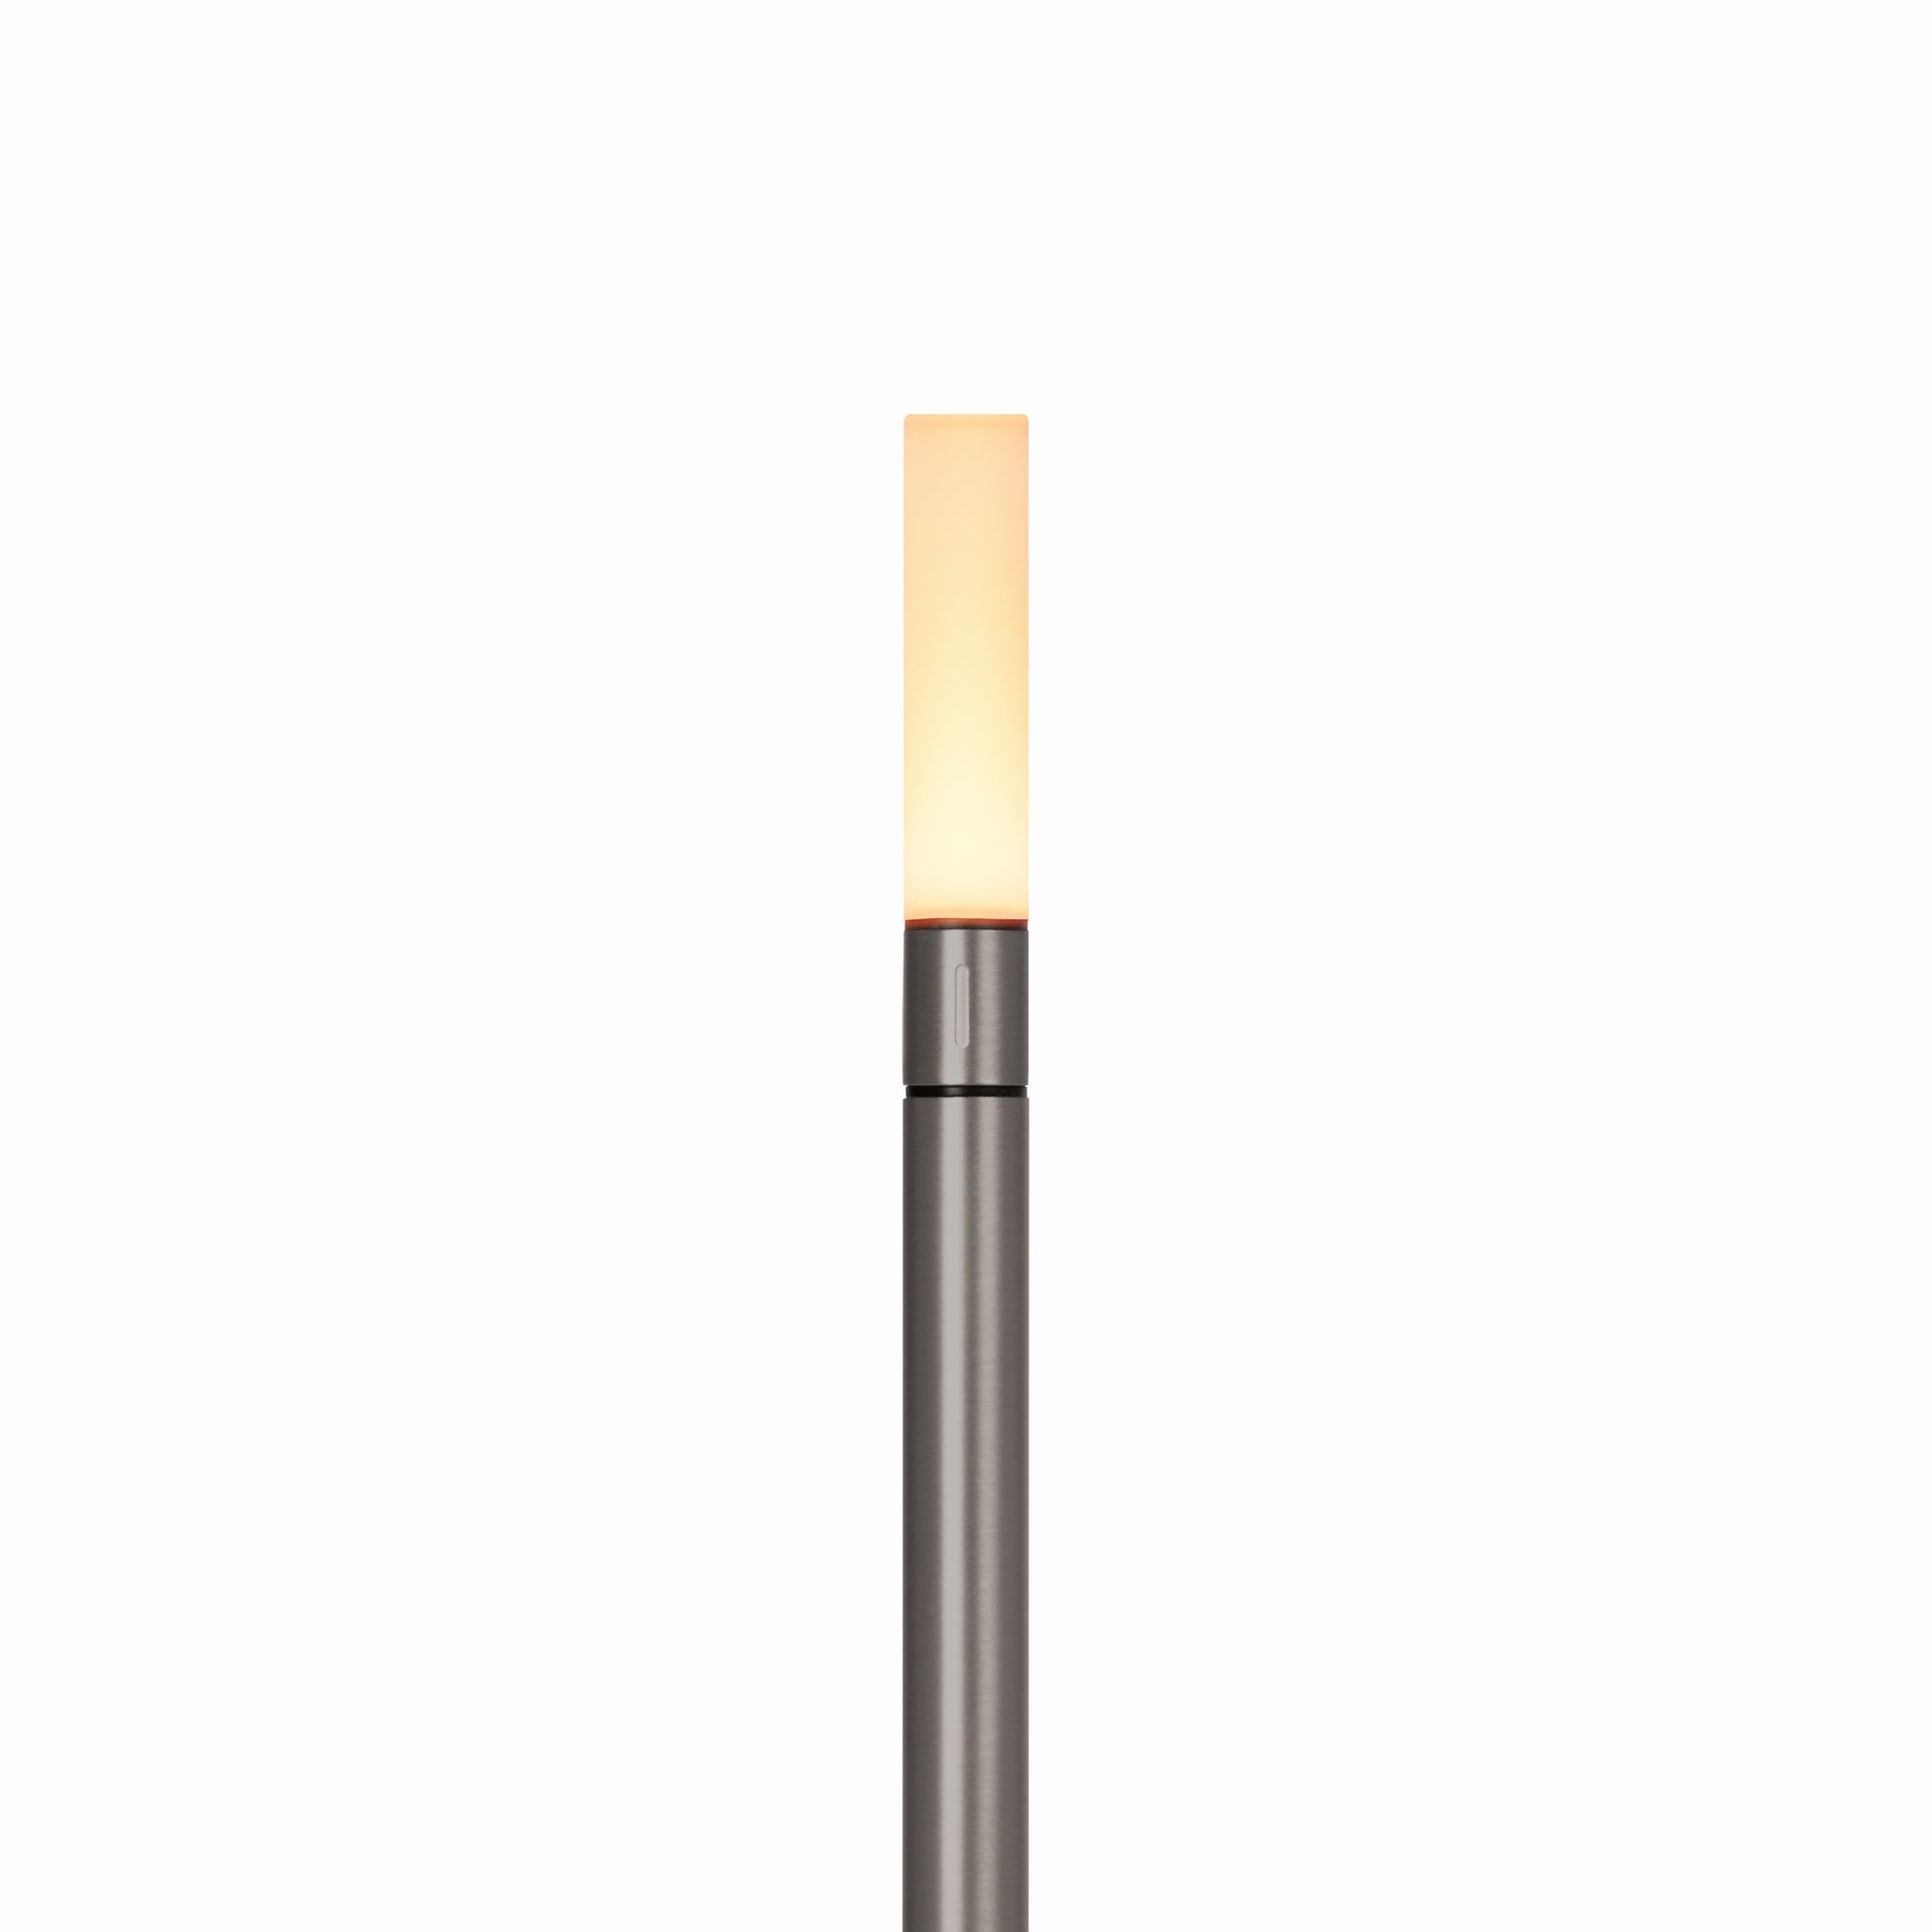 Graypants Wick Lamp - Enhance Ambiance Anywhere"